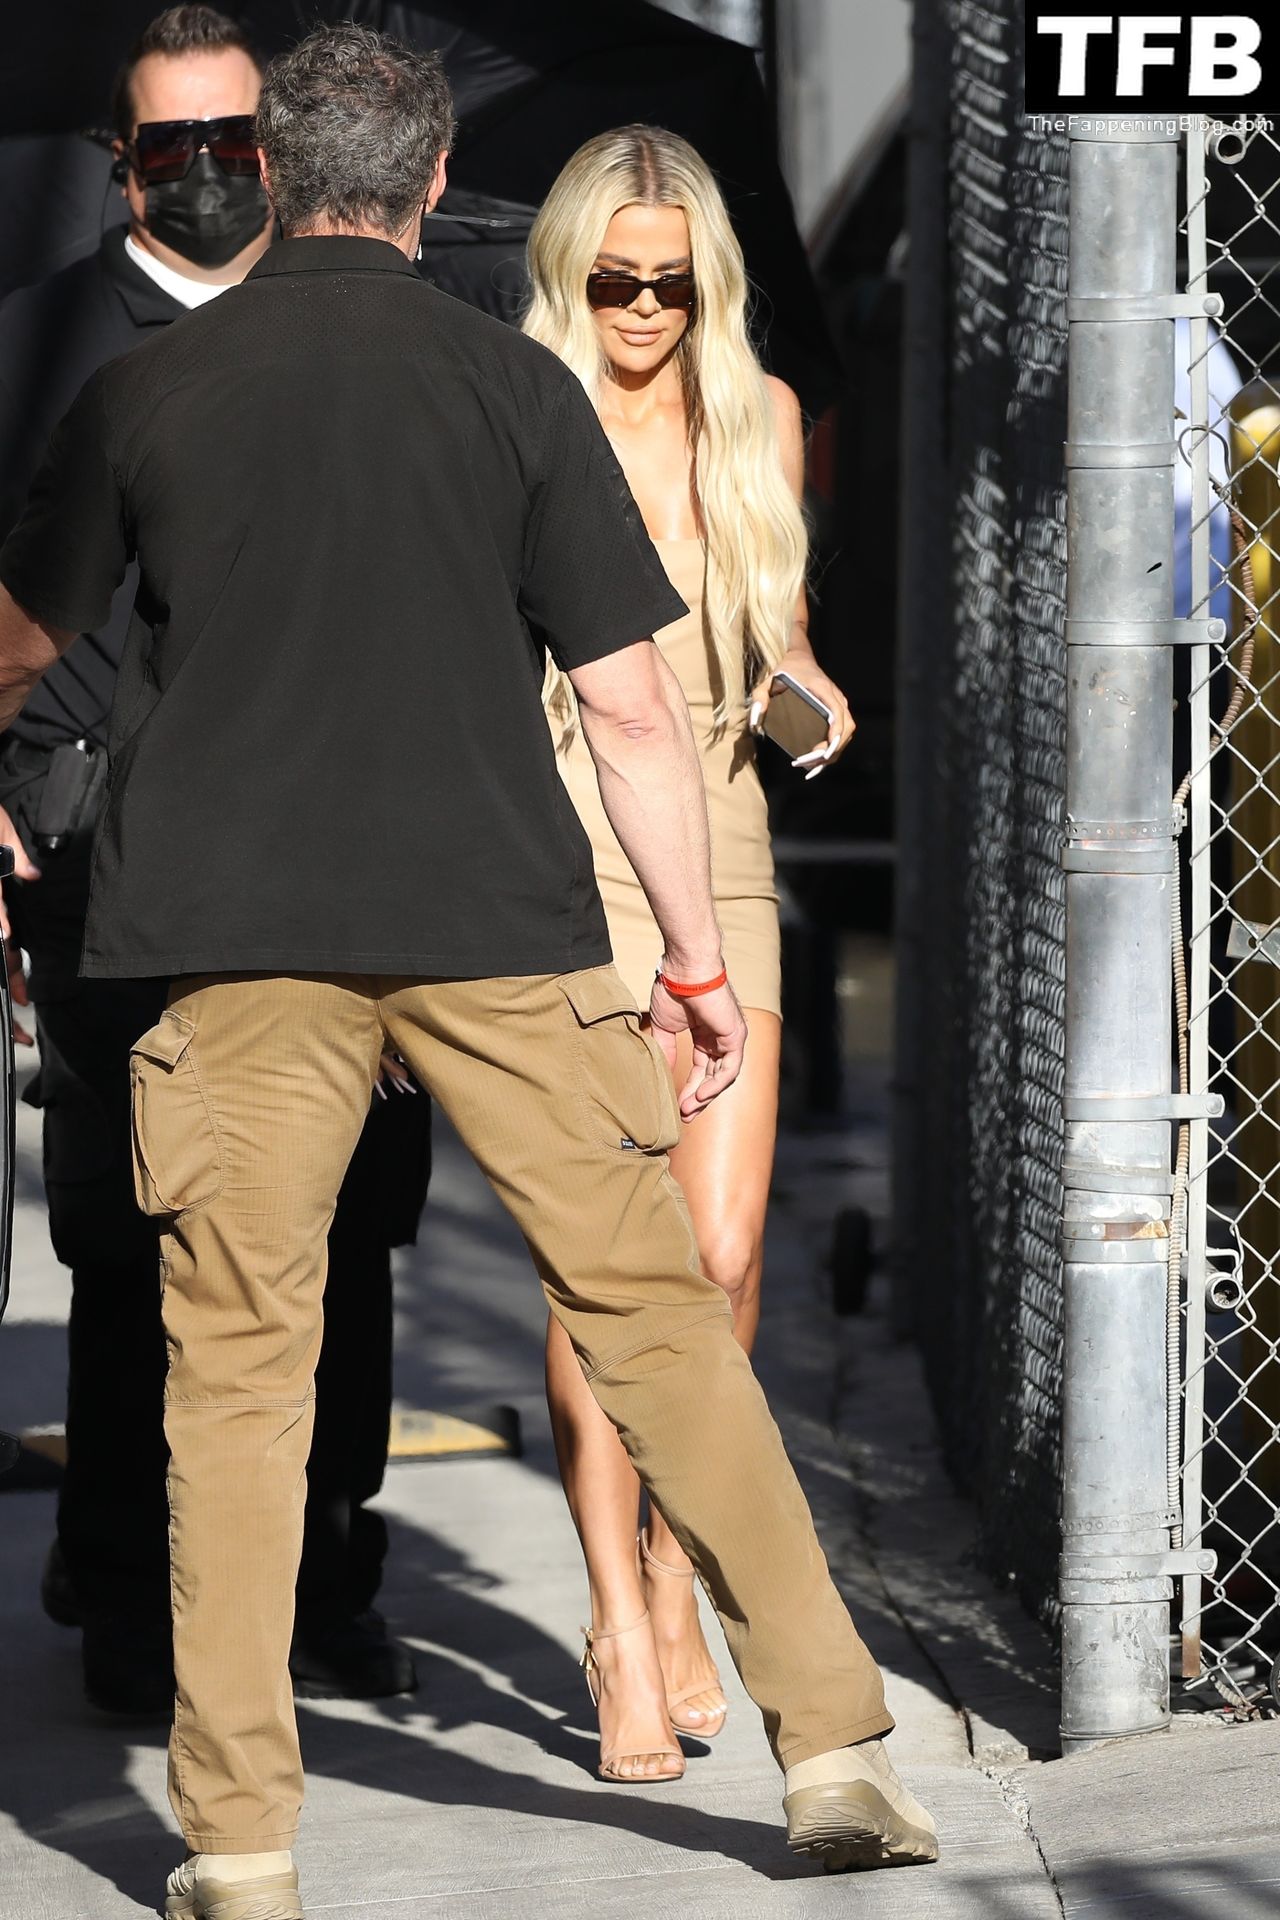 Khloe-Kardashian-Sexy-Legs-The-Fappening-Blog-28.jpg